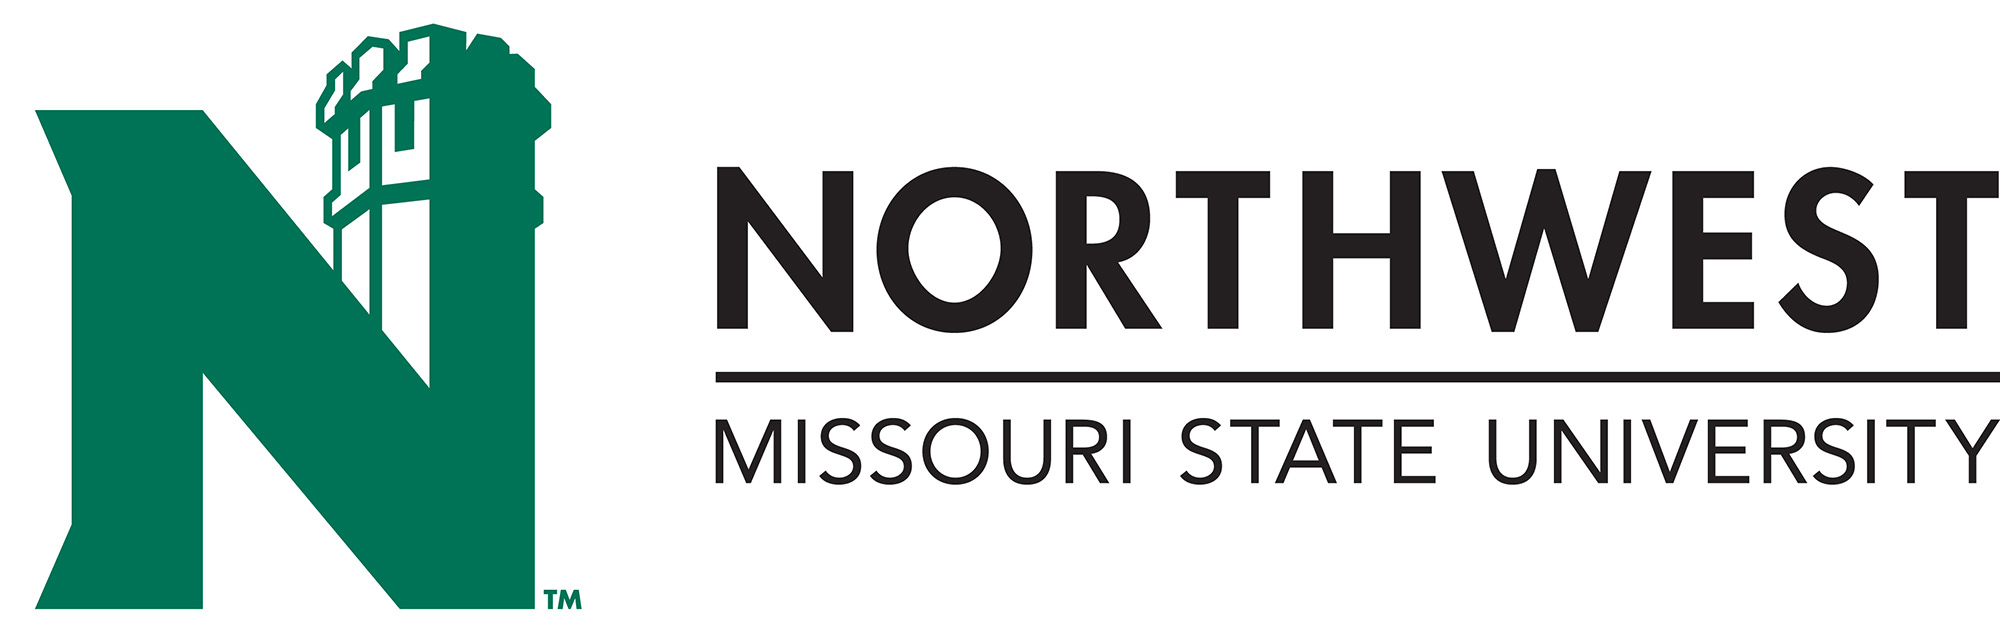 Northwest Missouri State Extra Large Magnet Official Logo 